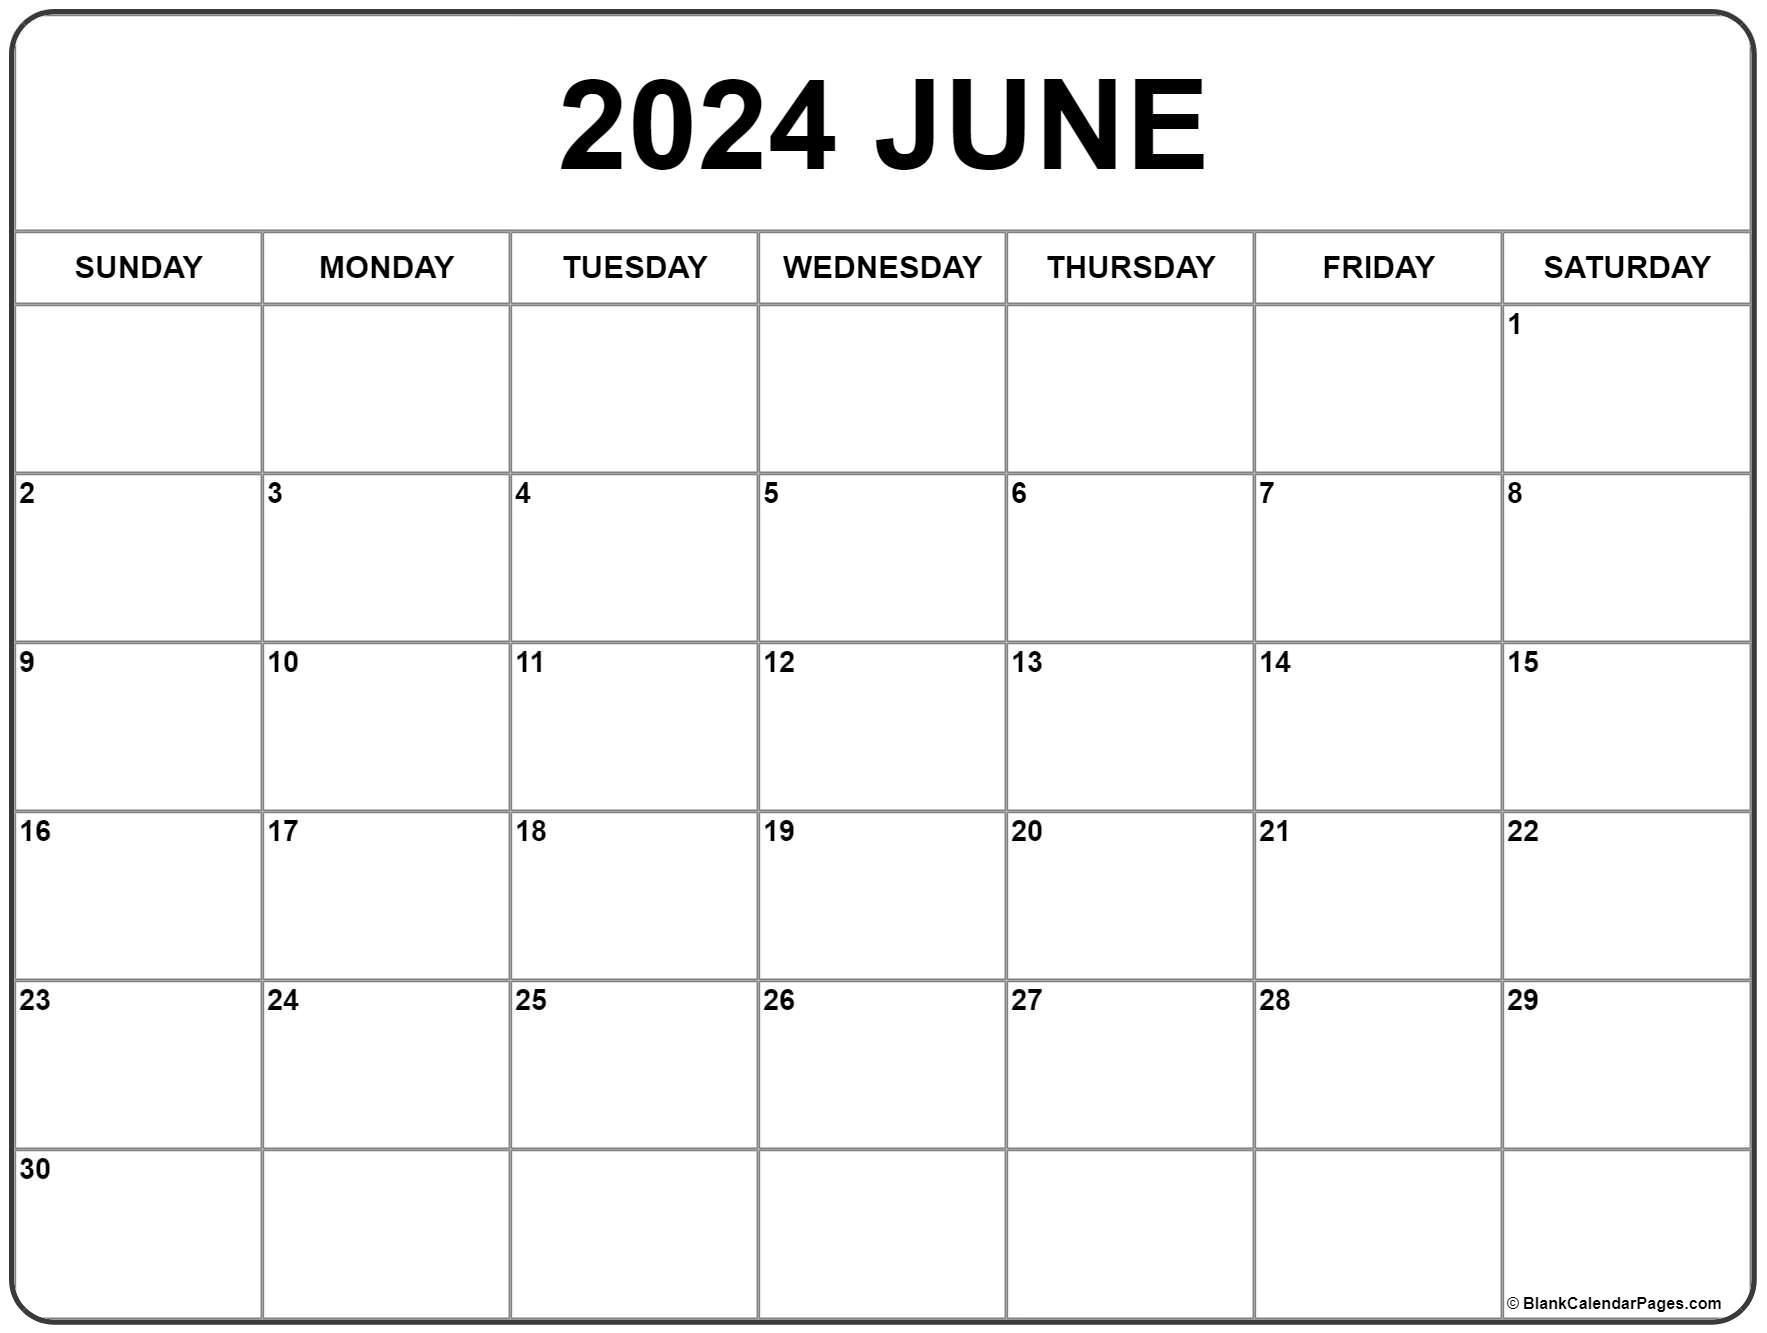 Printable June 2021 Calendar June 2021 calendar | free printable monthly calendars